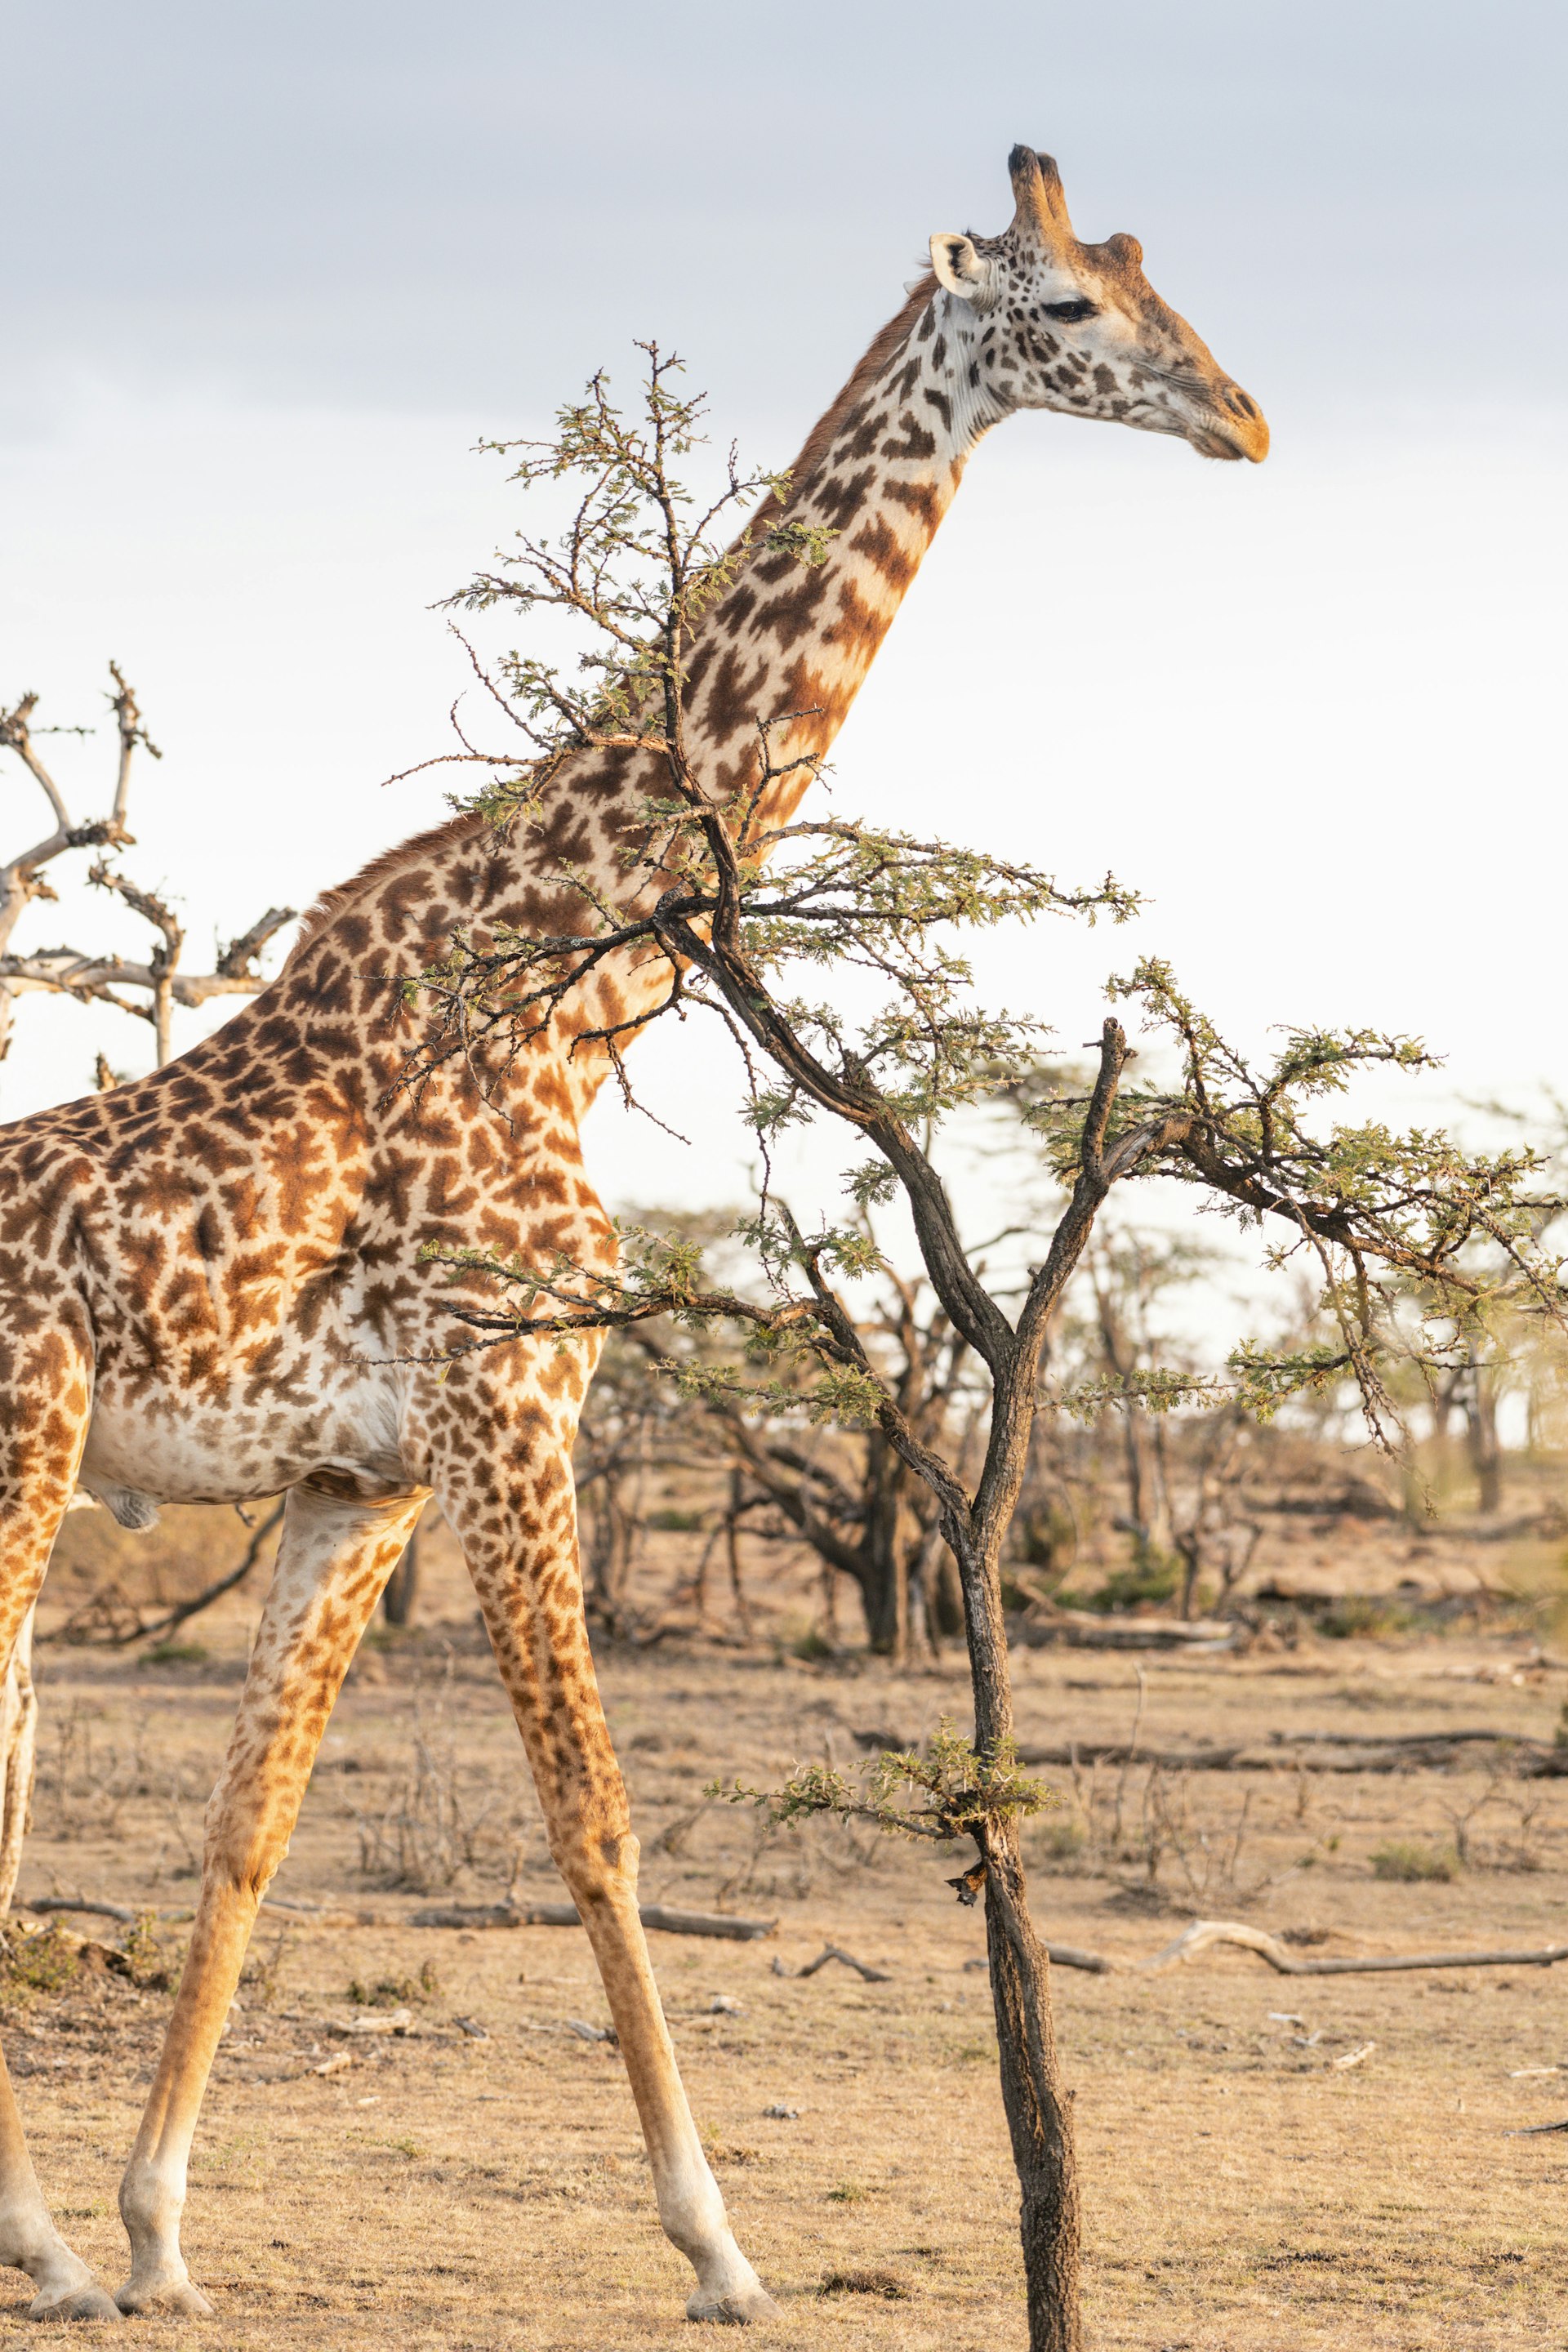 A giraffe walking between small trees in open savannah 